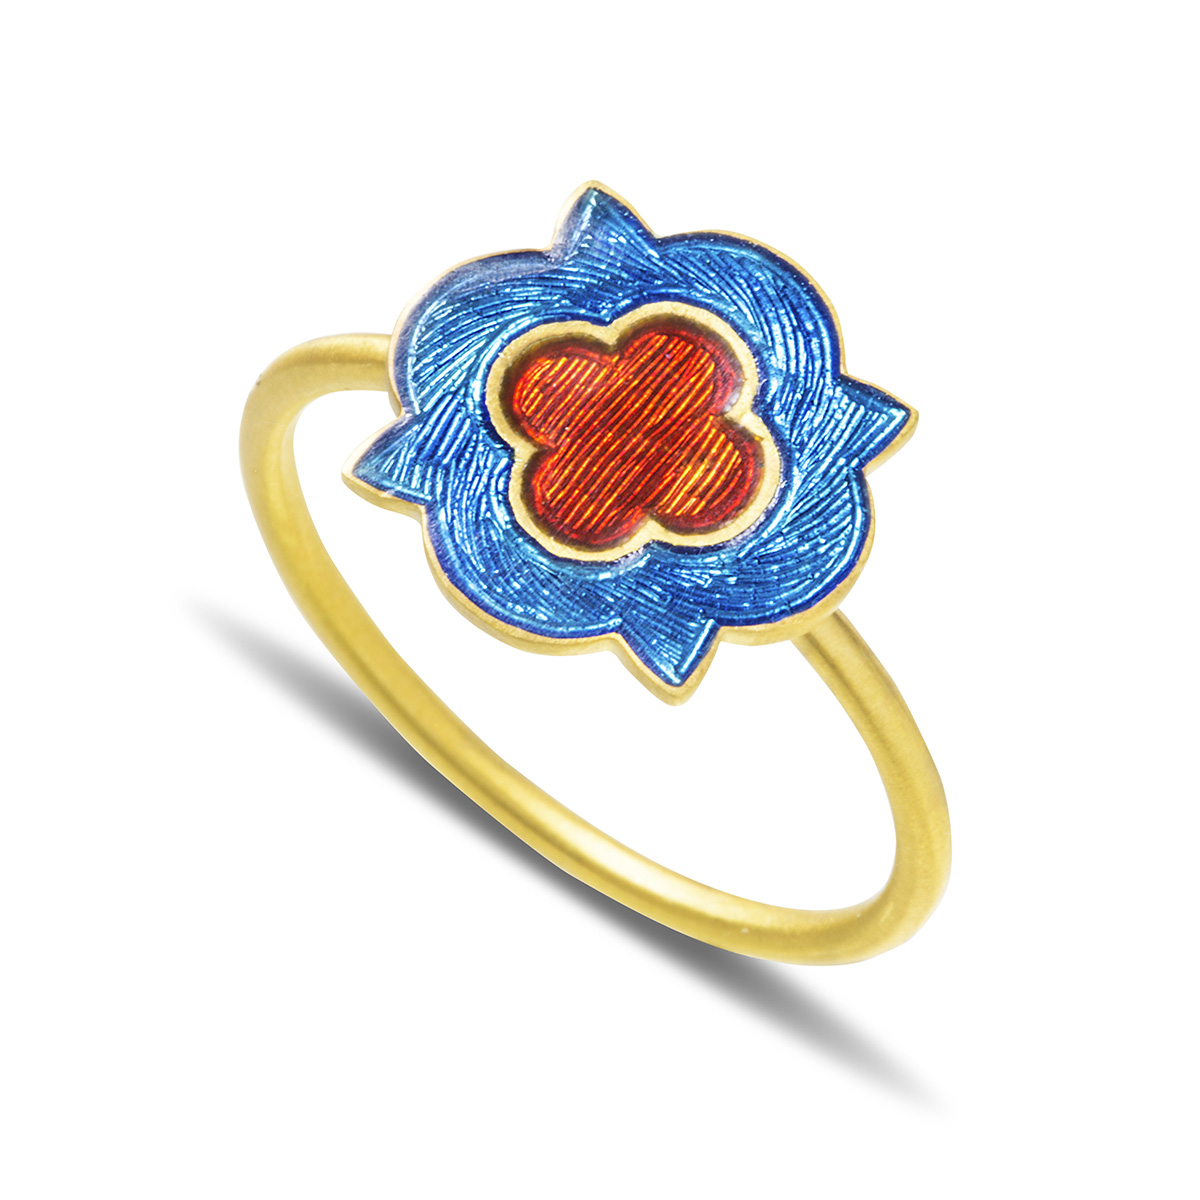 Antique Art Nouveau Enamel Flower Ring 10k & Seed Pearls | Etsy | Enamel  flower, Flower ring, Art nouveau flowers